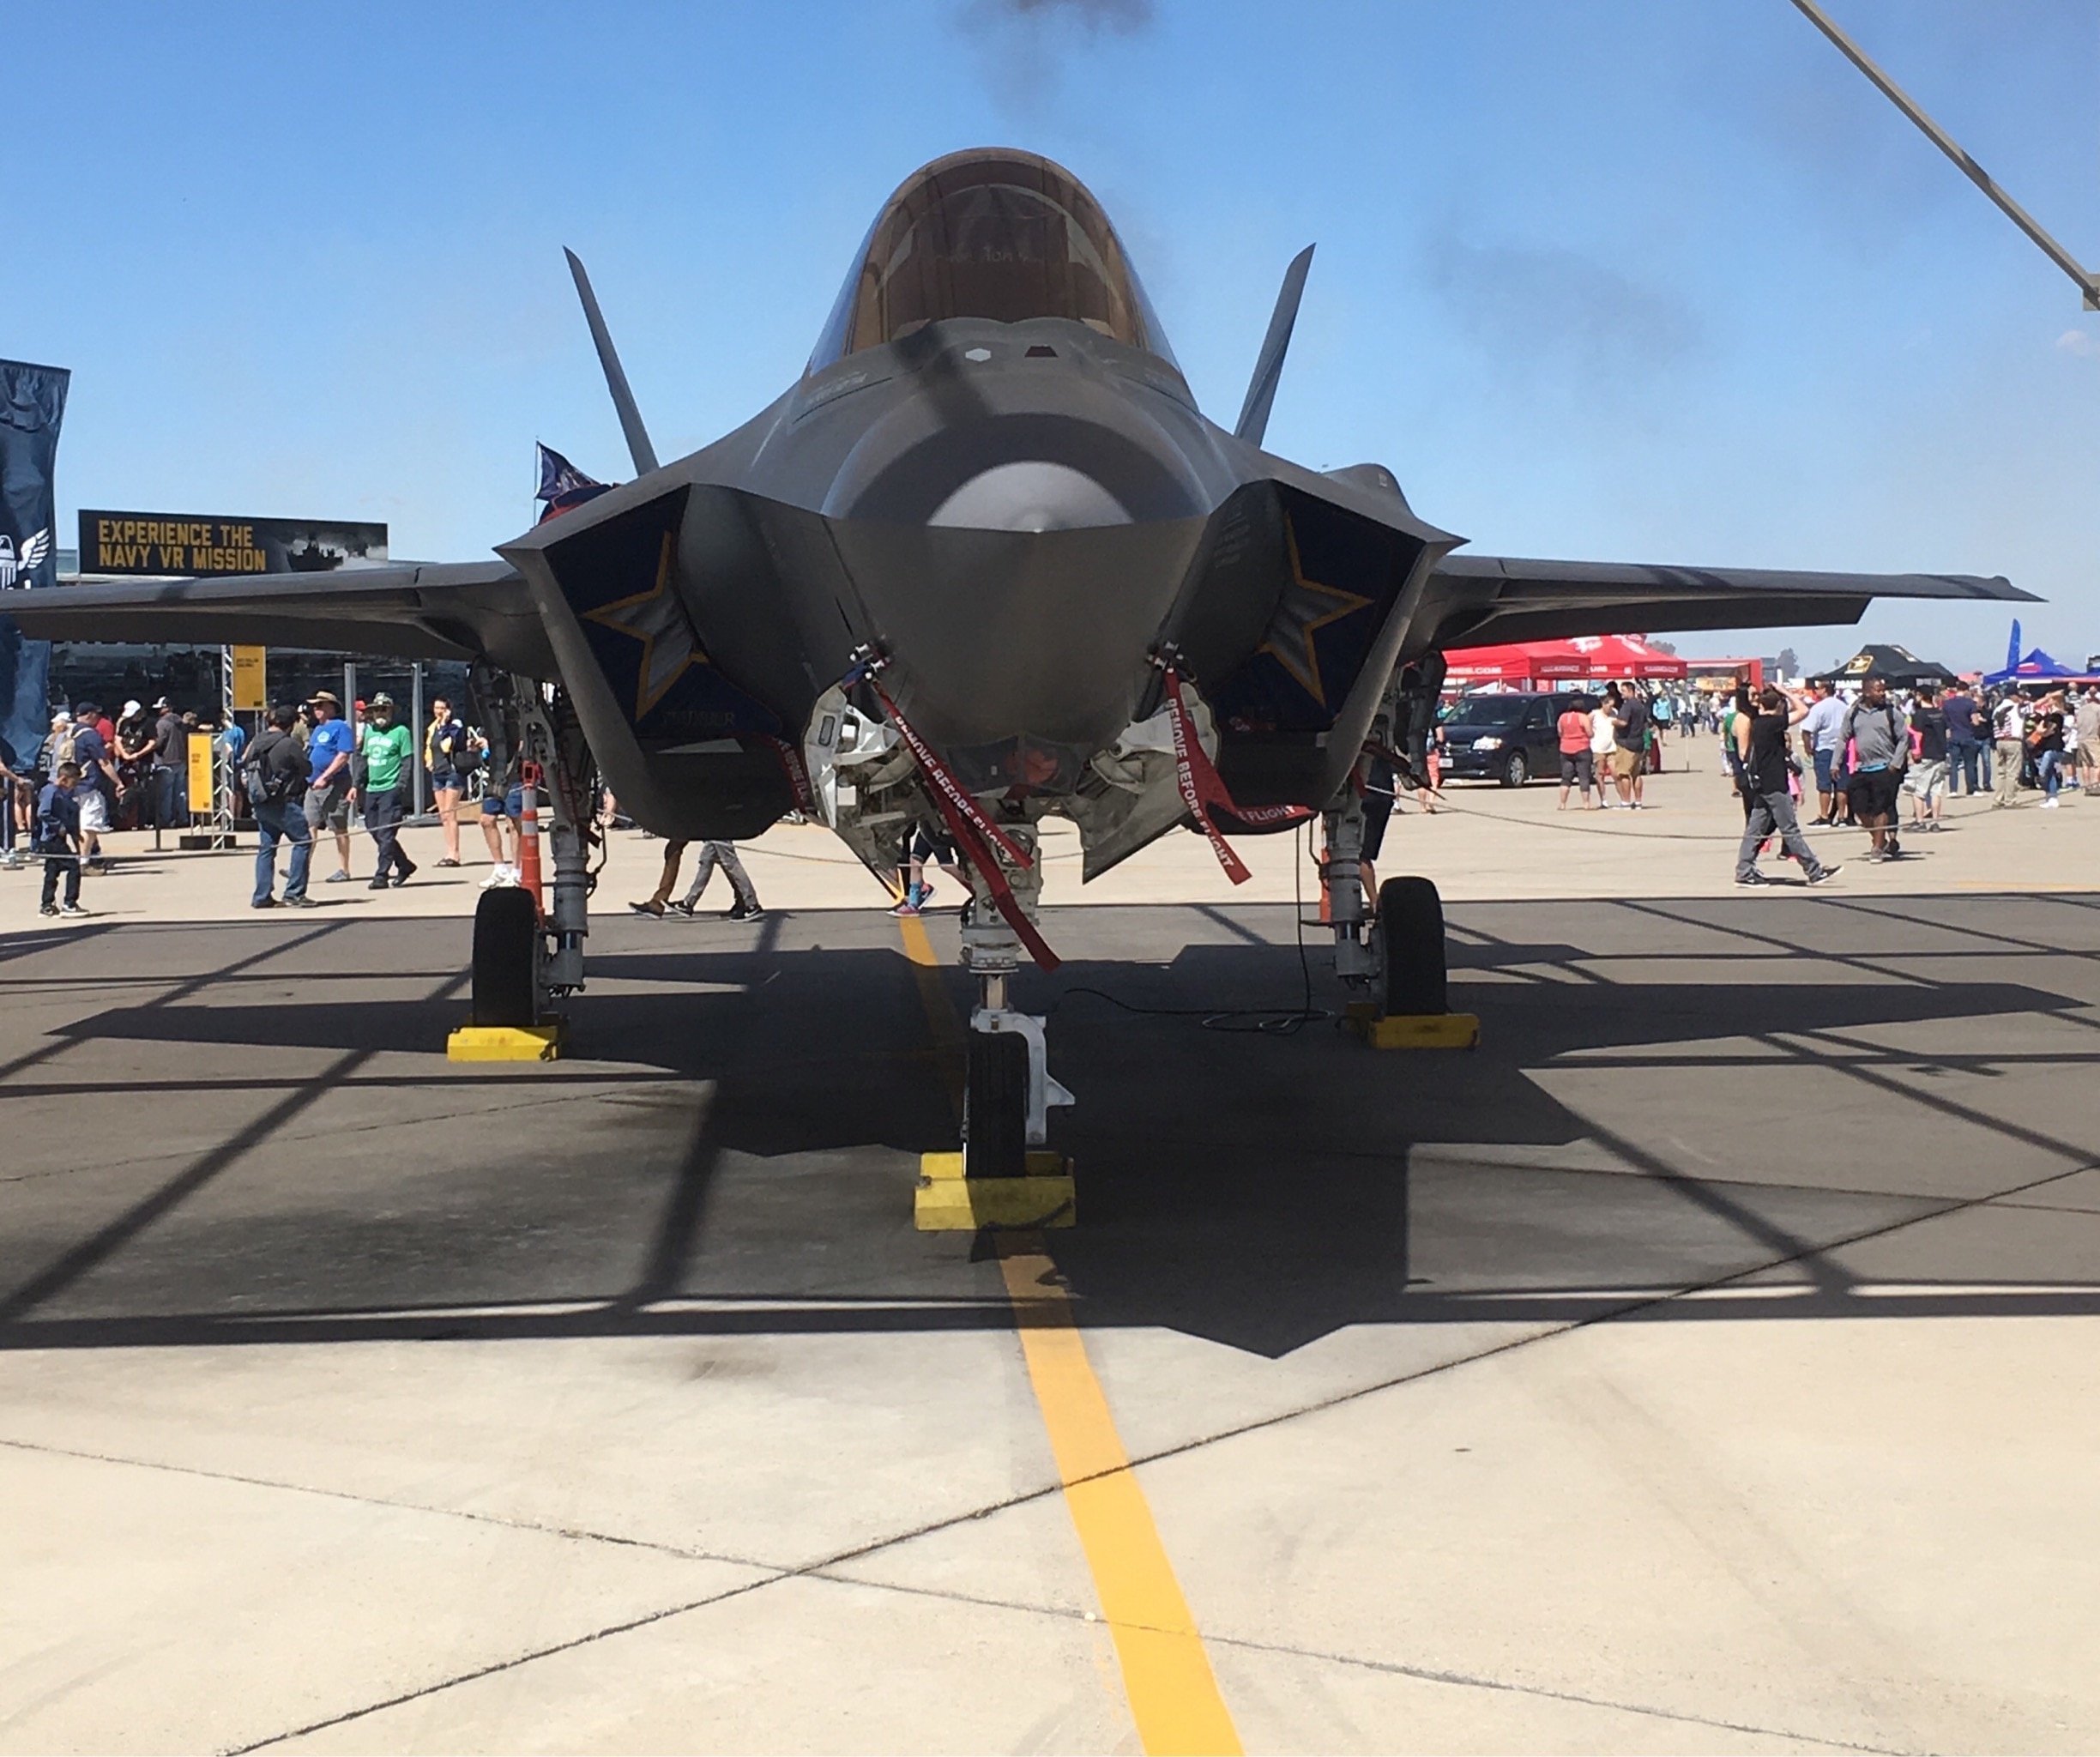 Visite Base da Força Aérea de Luke em Phoenix